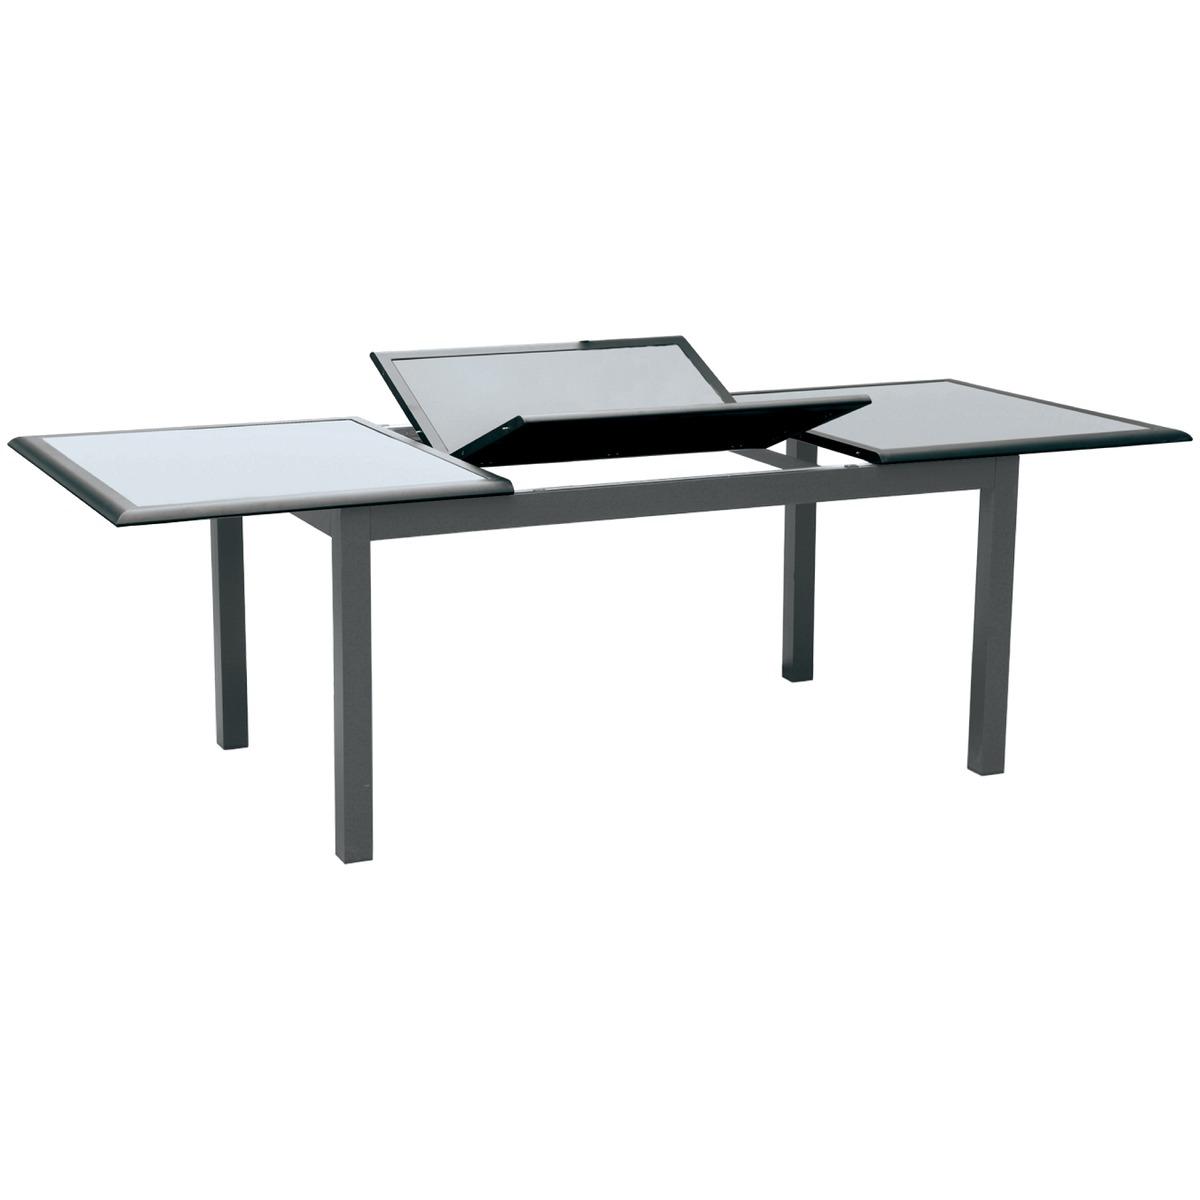 Table Valencia extensible en verre - 160 x 240 x 100 cm - gris